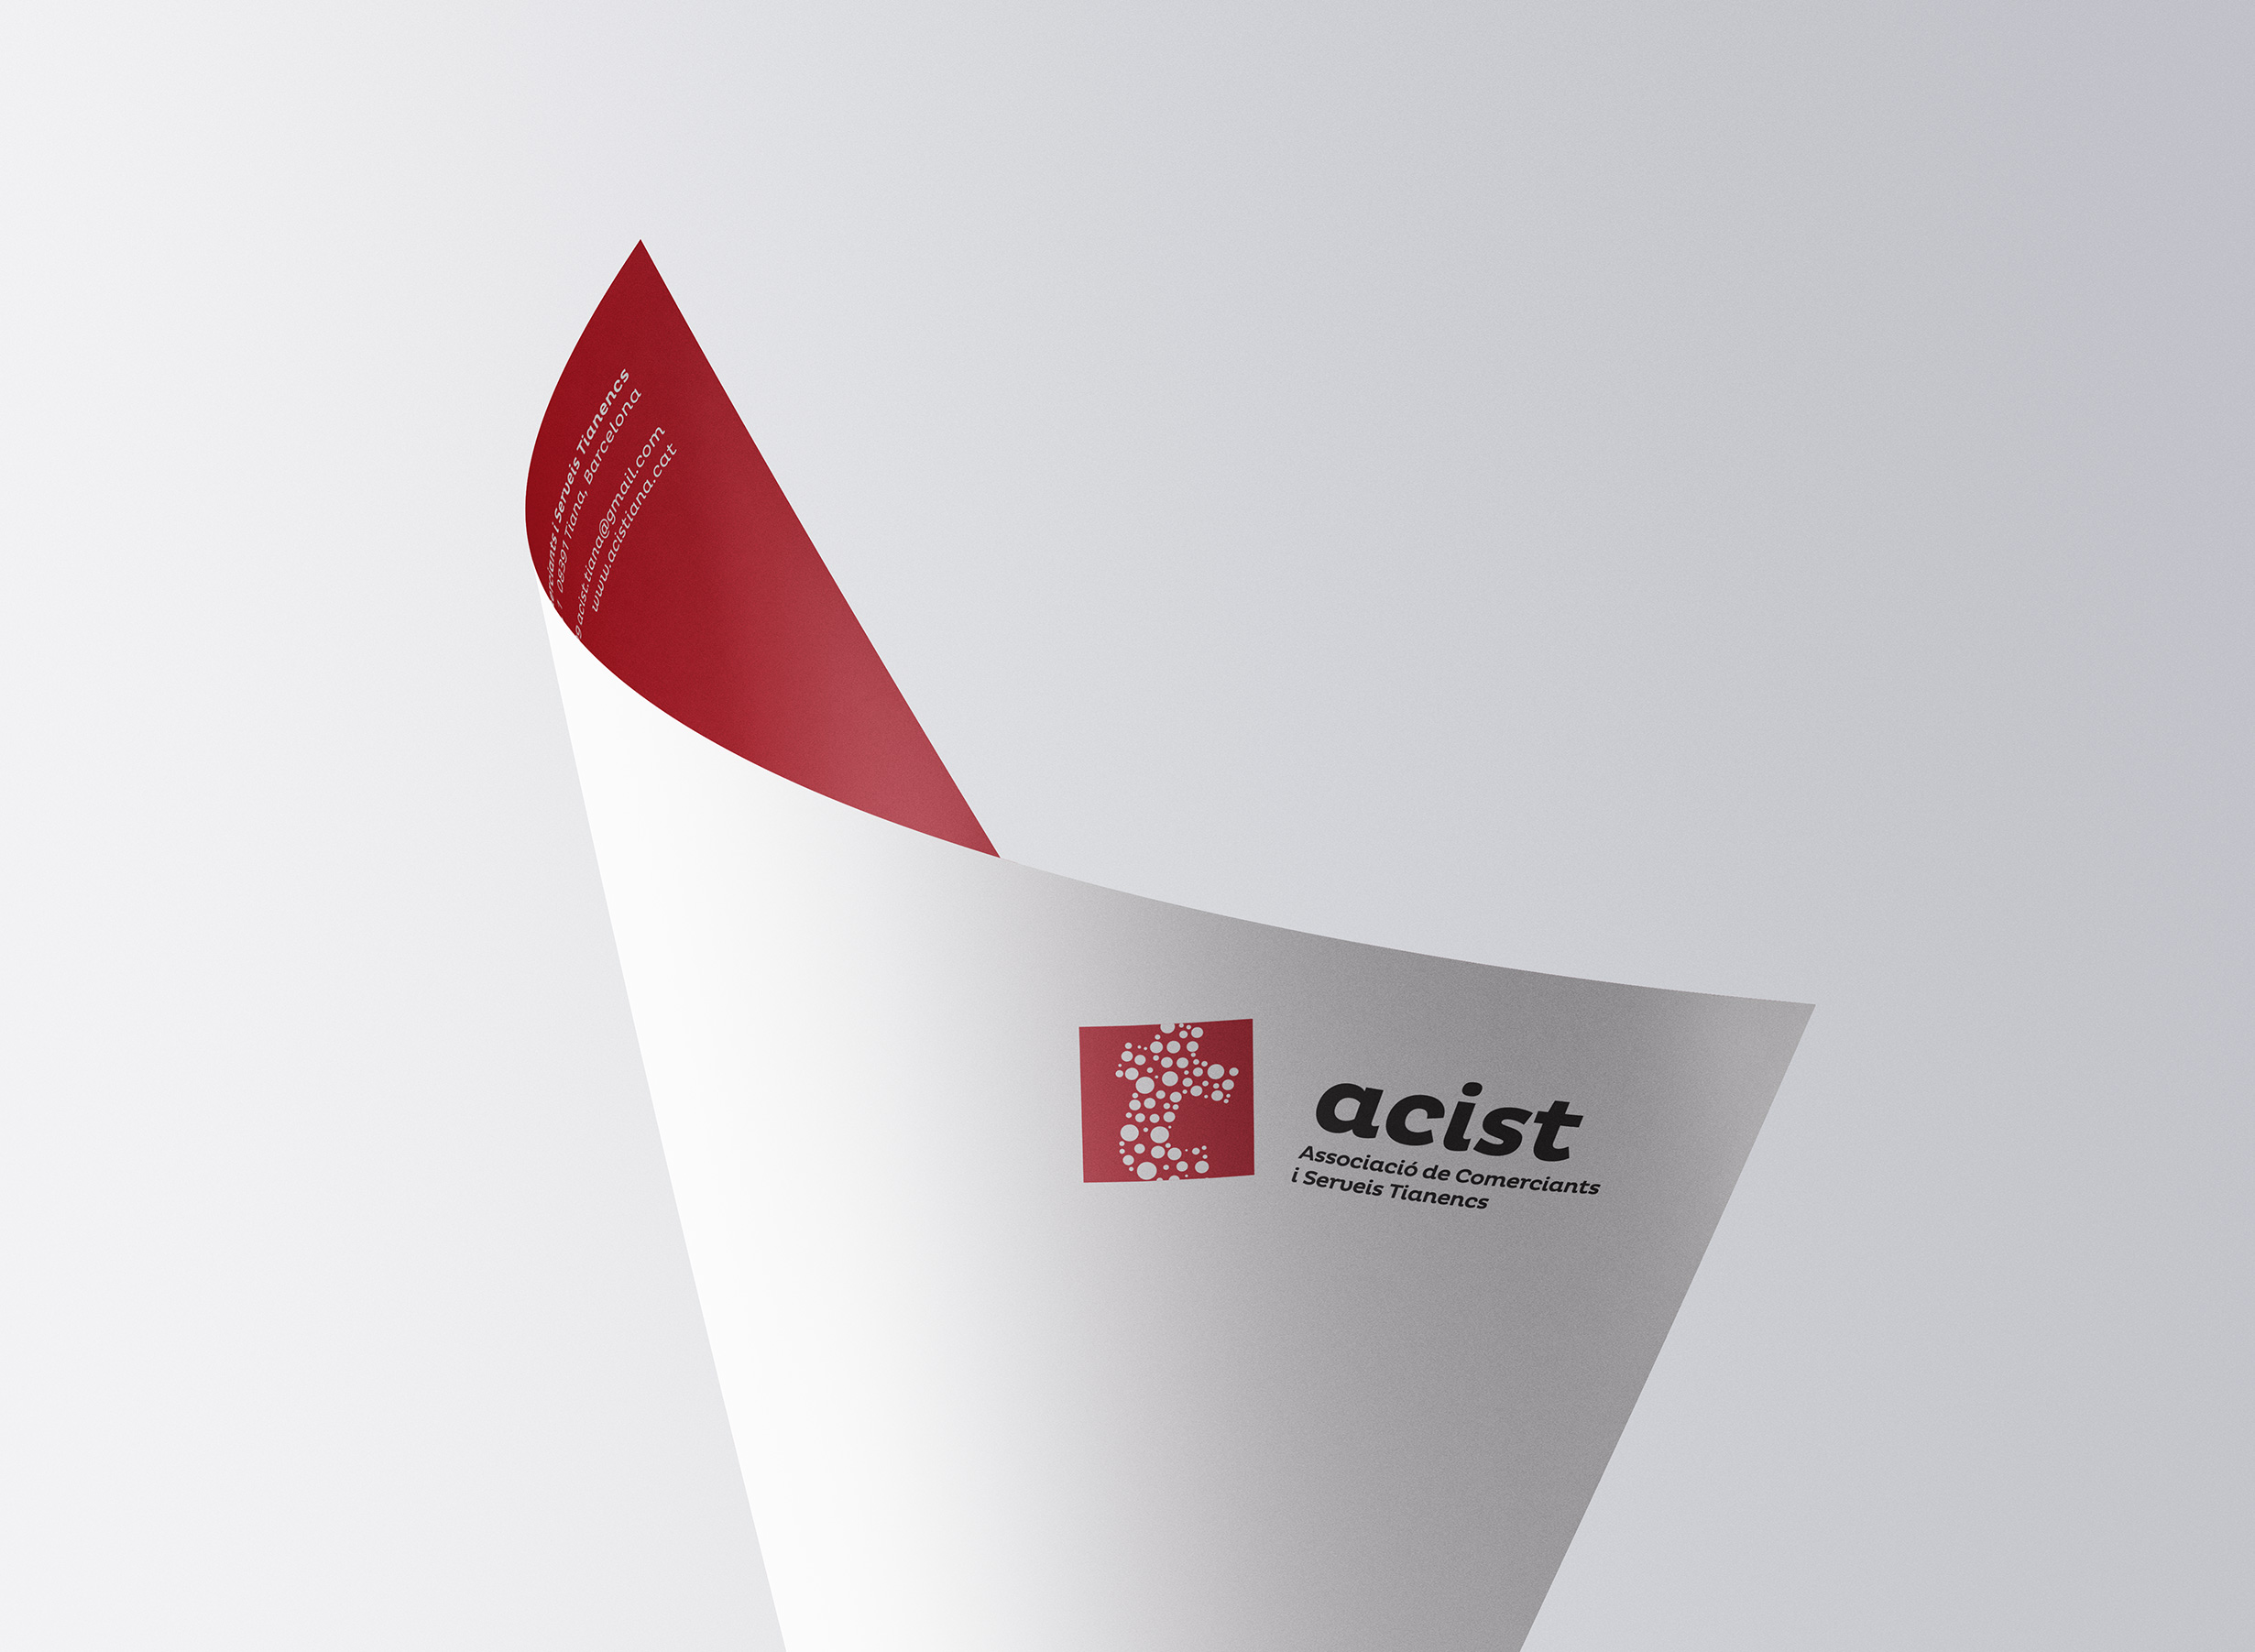 ACIST logo